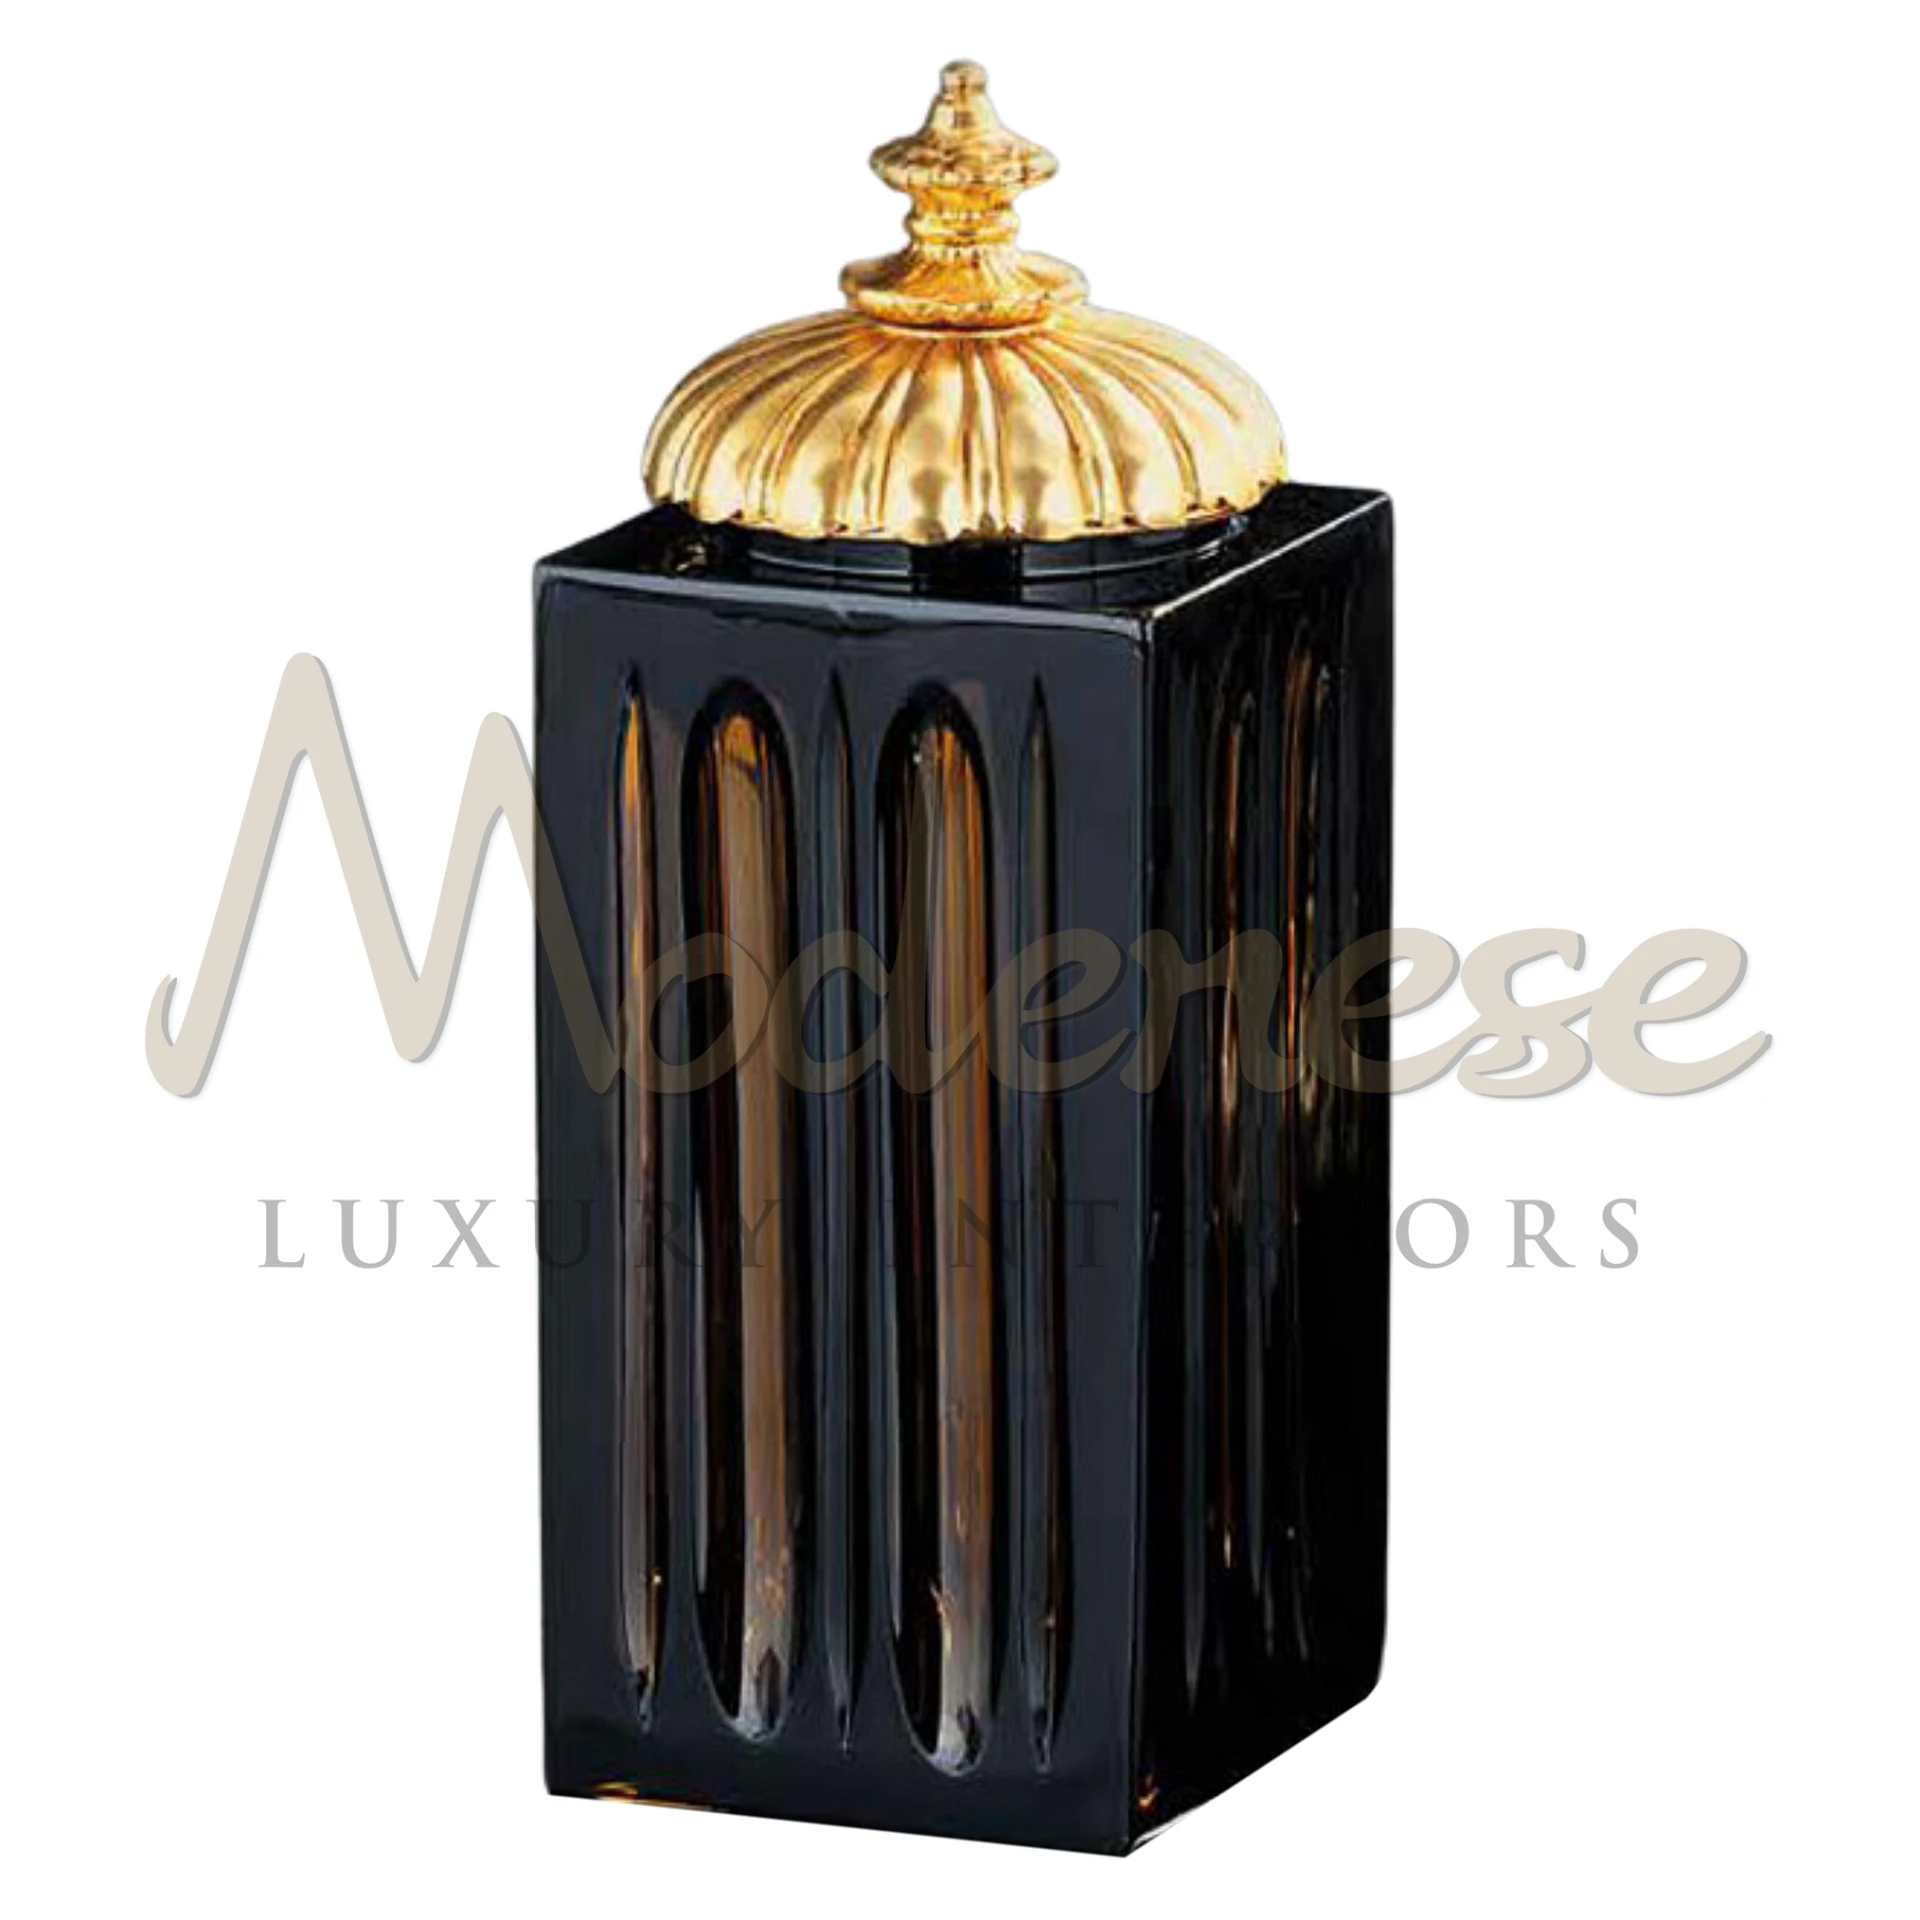 Elegant Royal Tall Dark Glass Box, ideal for decorative storage, enhances luxury and sophistication in interior design.